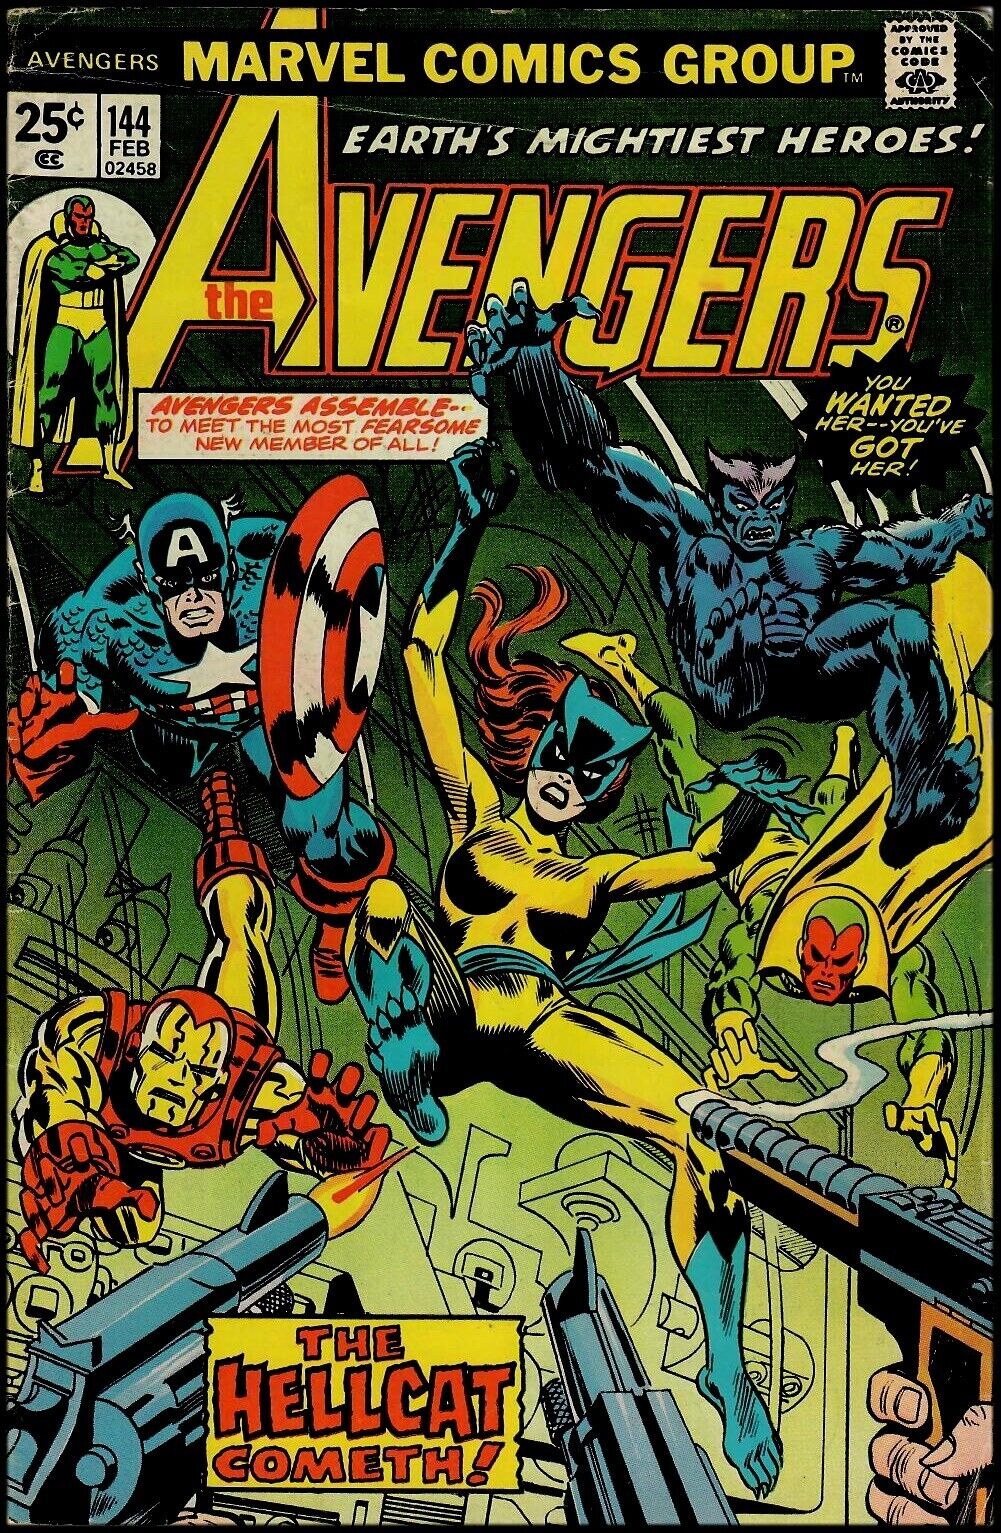 Avengers (1963 series) #144 '1st Hellcat' GD+ Condition • Marvel Comics • 1976